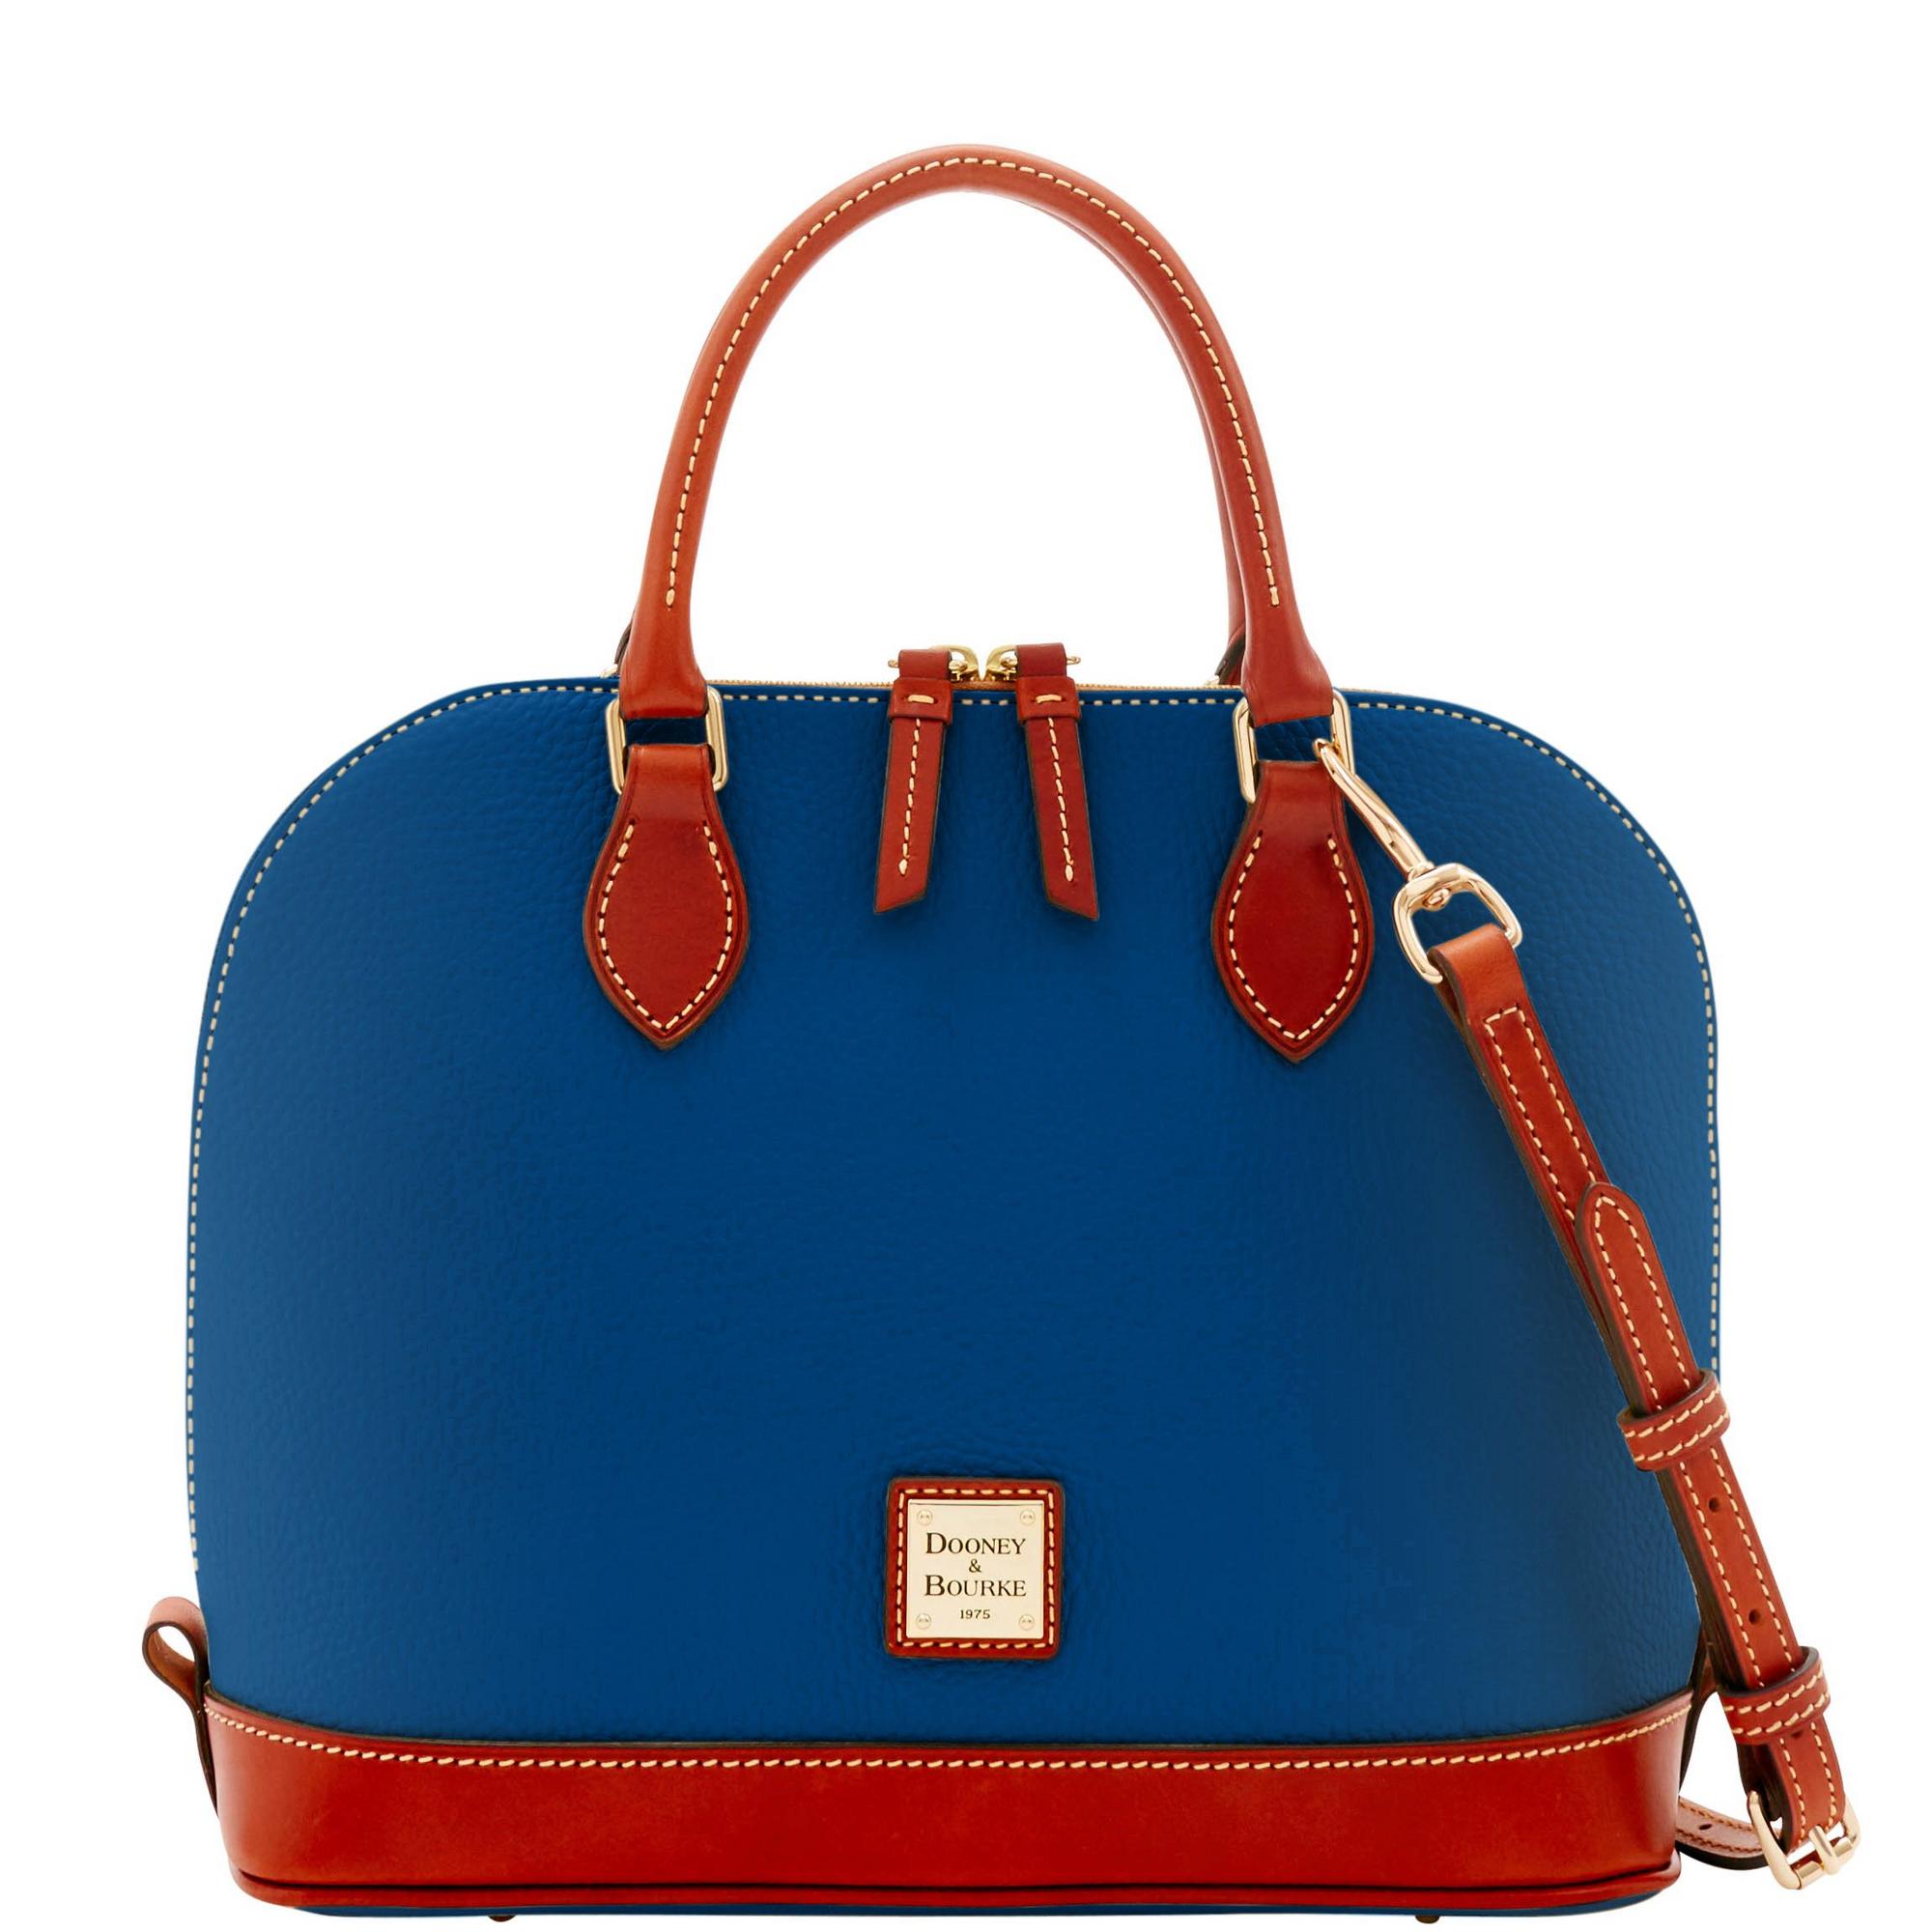 Dooney & Bourke Sale: Get Up to 50% Off Select Handbags | Entertainment ...